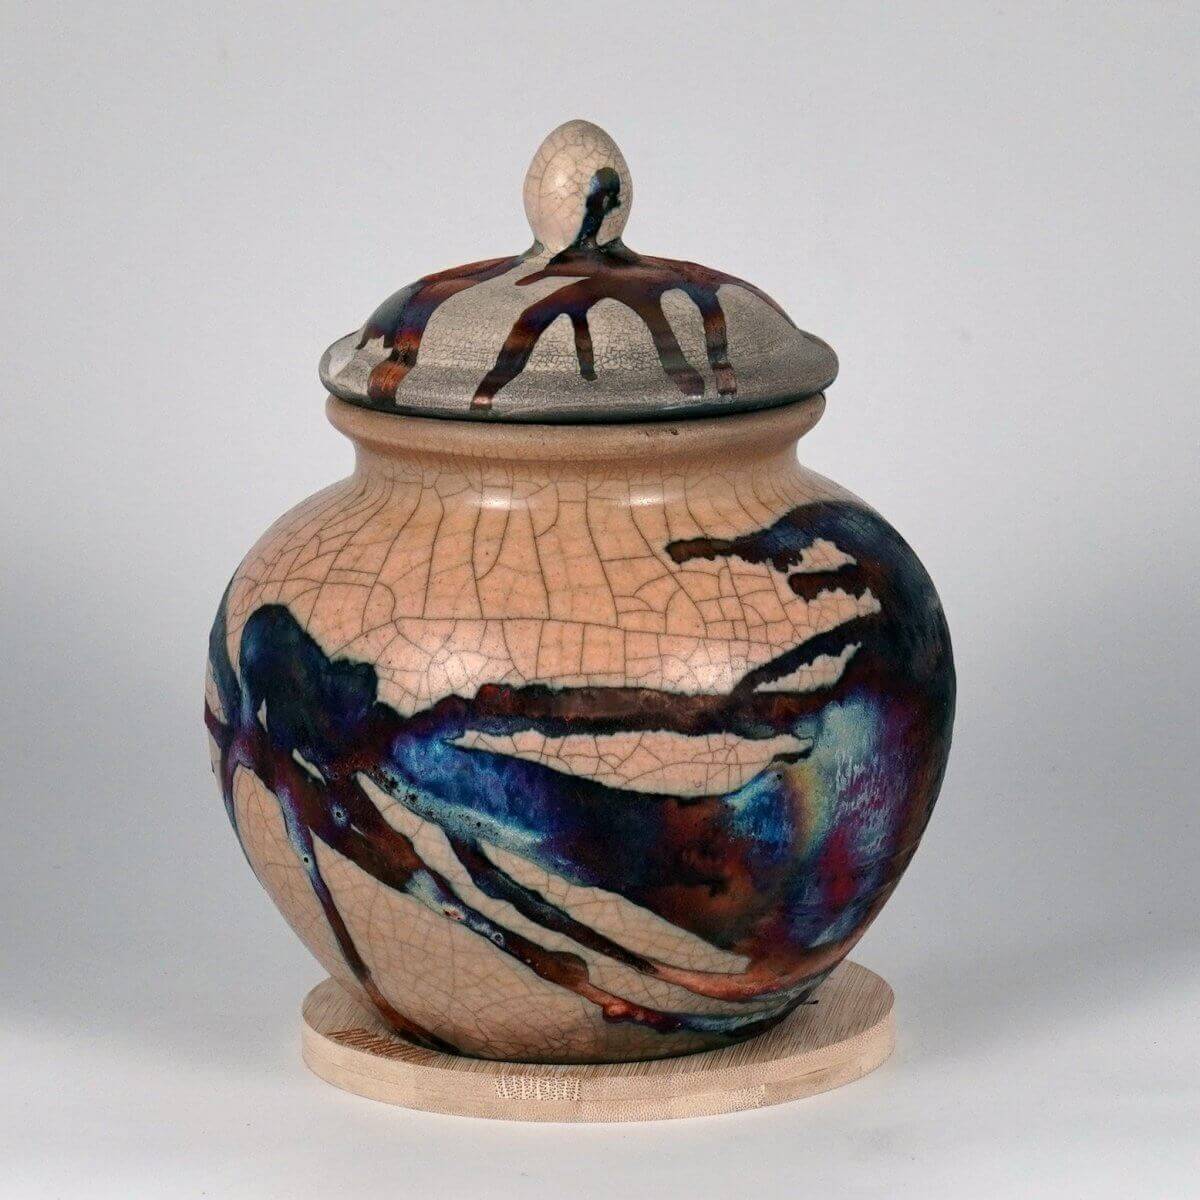 RAAQUU Tamashii Ceramic Half Copper Matte Pet Urn for Remains/Ashes S/N8000114 - Raku Pottery 85 cubic inches Unique Handmade Cremation Vessel - RAAQUU